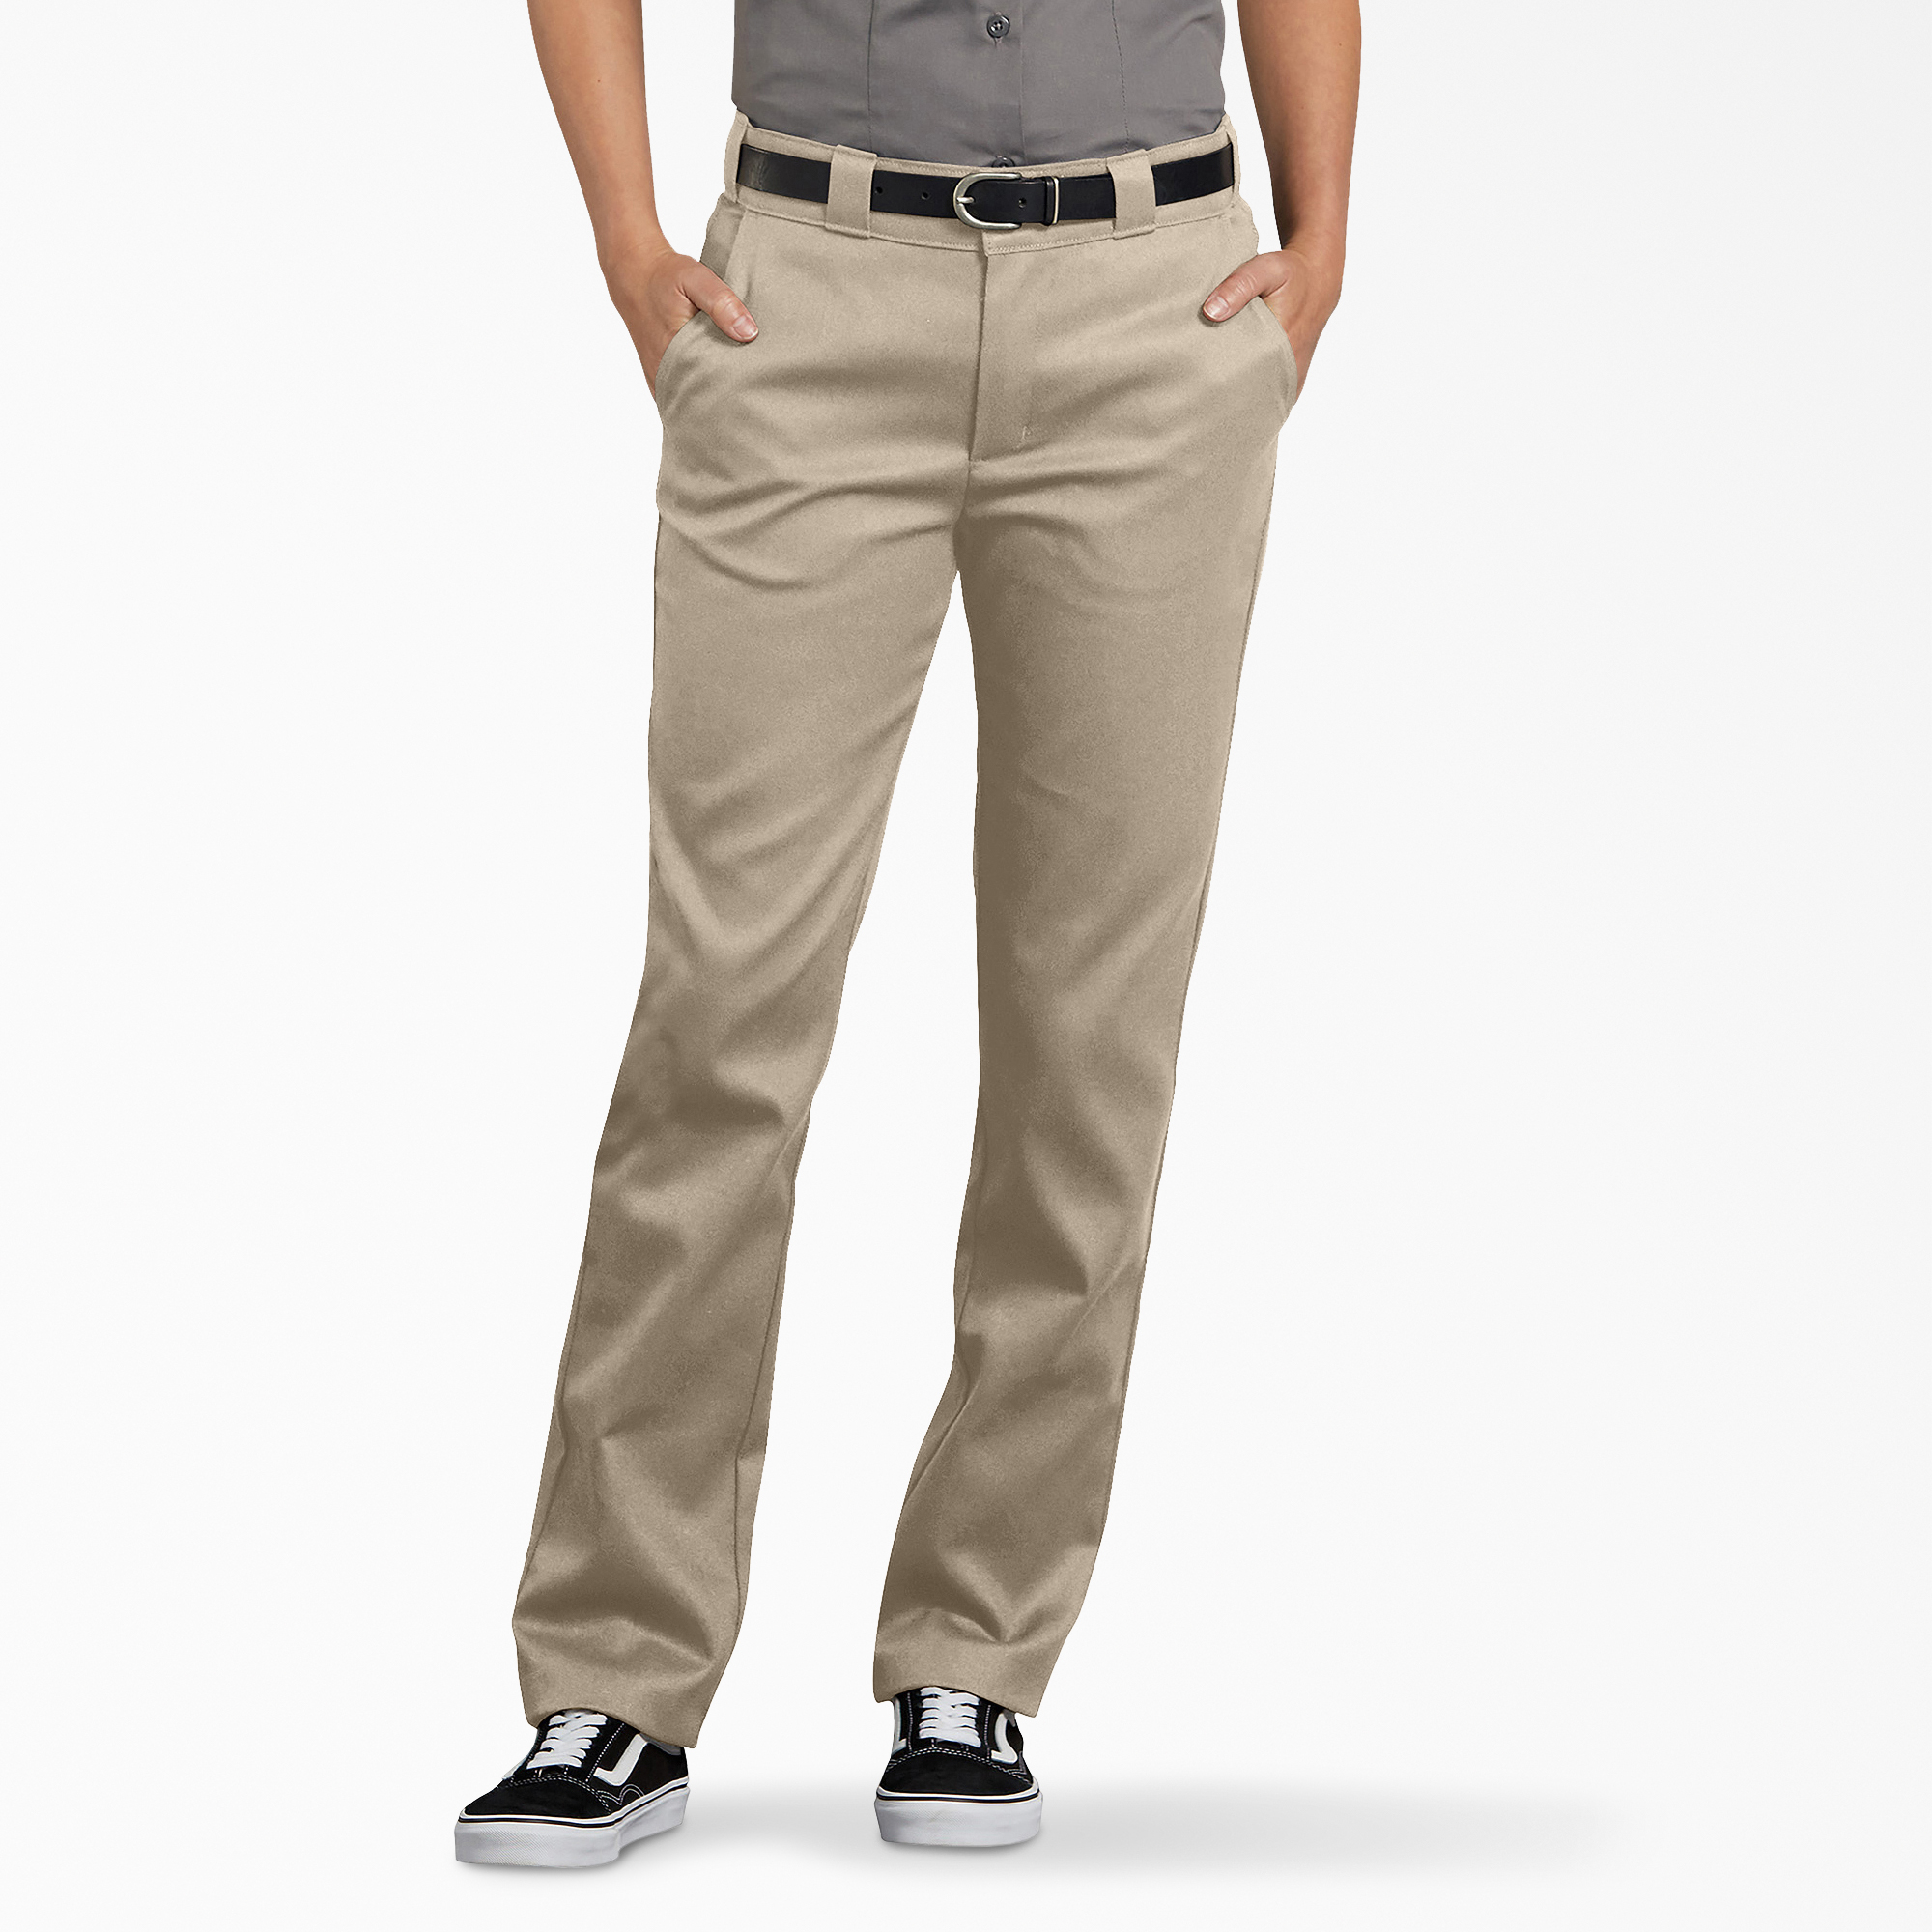 Women's FLEX Slim Fit Work Pants - Desert Khaki (DS)